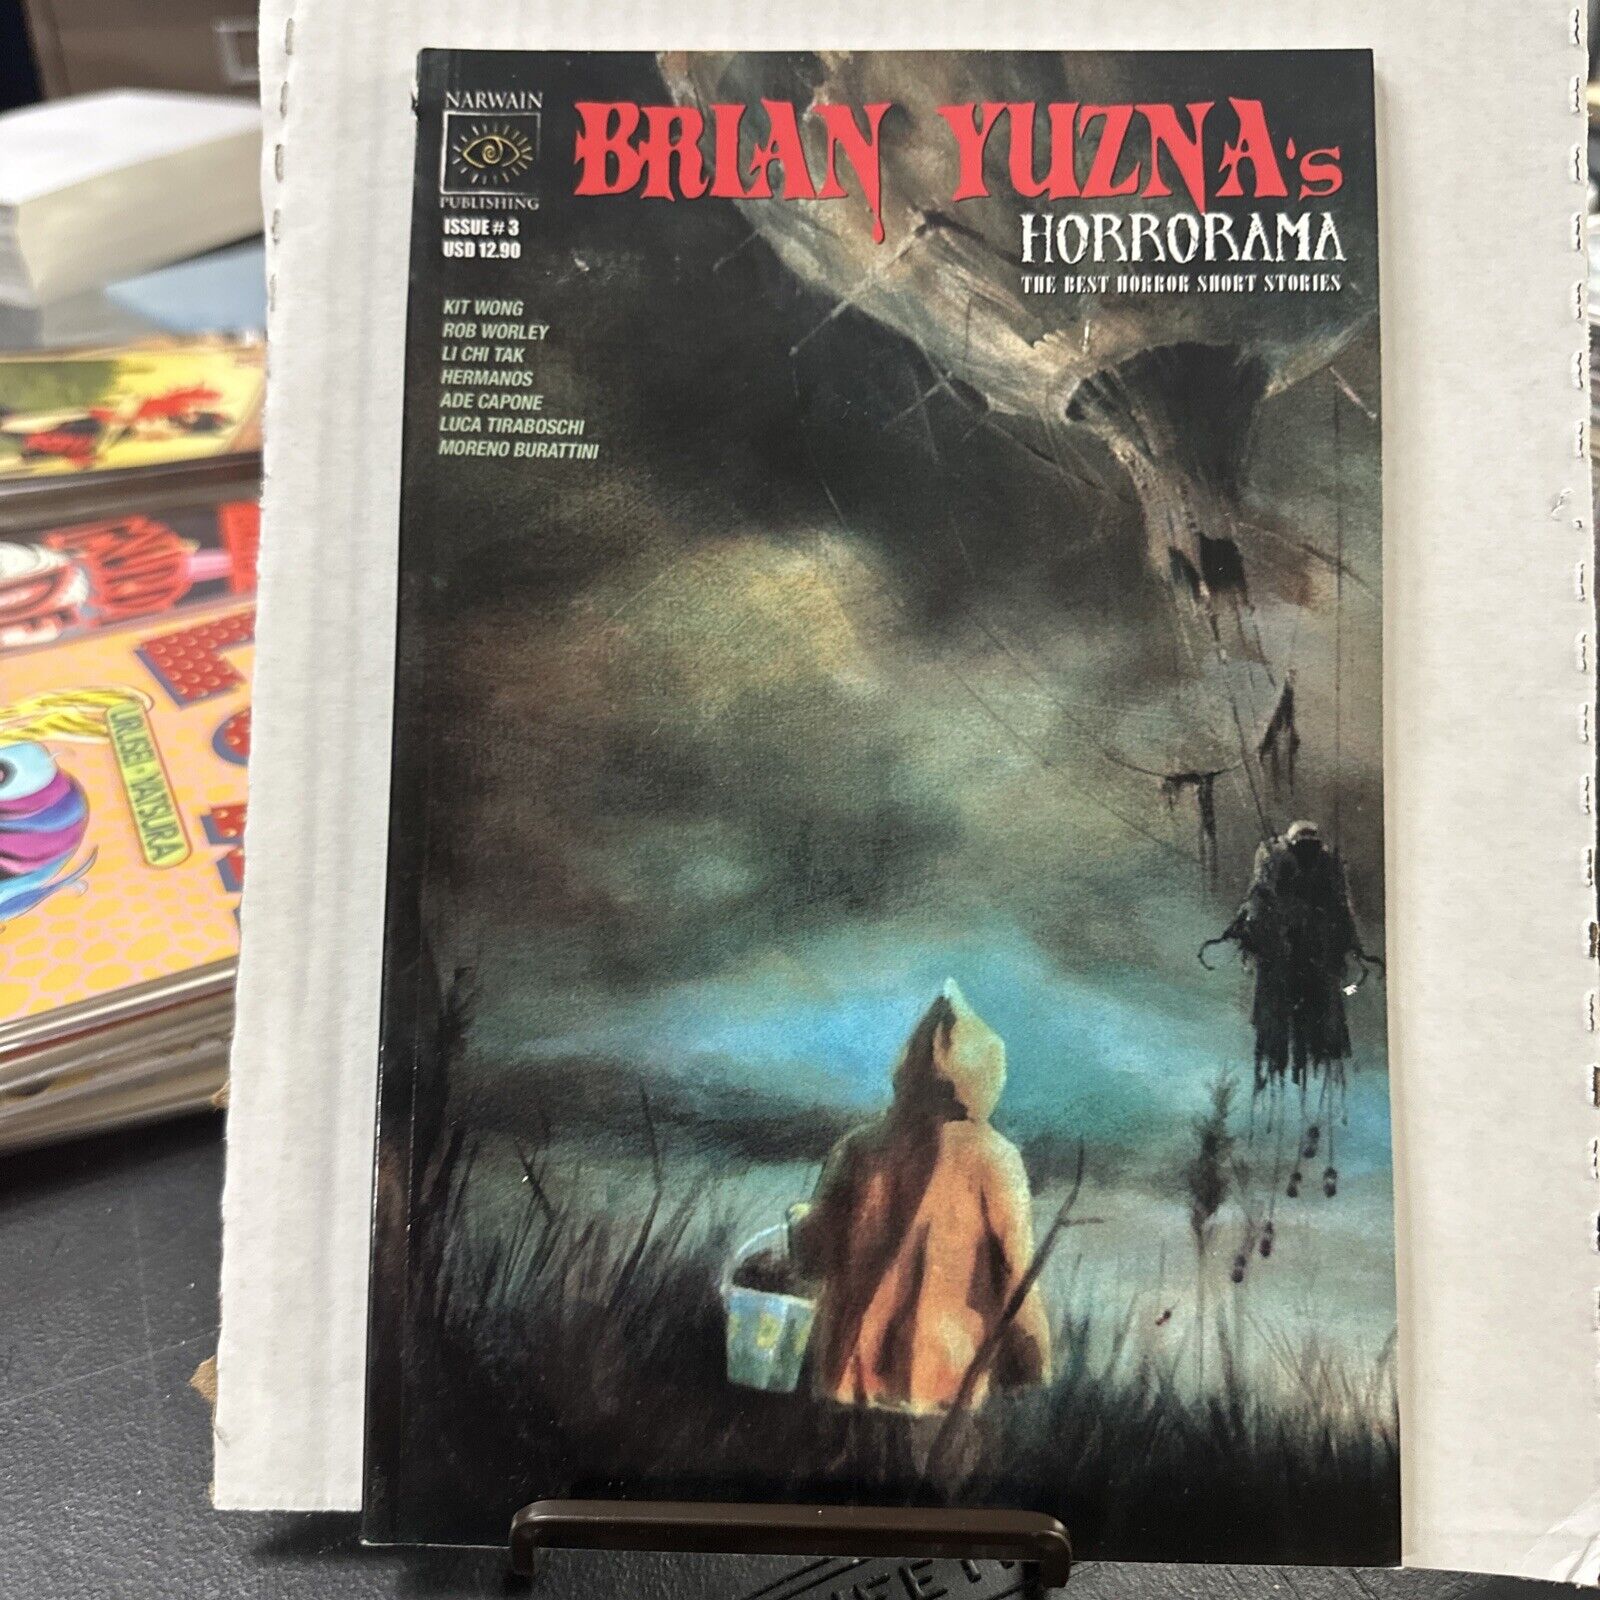 BRIAN YUZNA'S HORRORAMA #3 VF-NM 2005 NARWAIN PUBLISHING COMICS PALMIOTTI